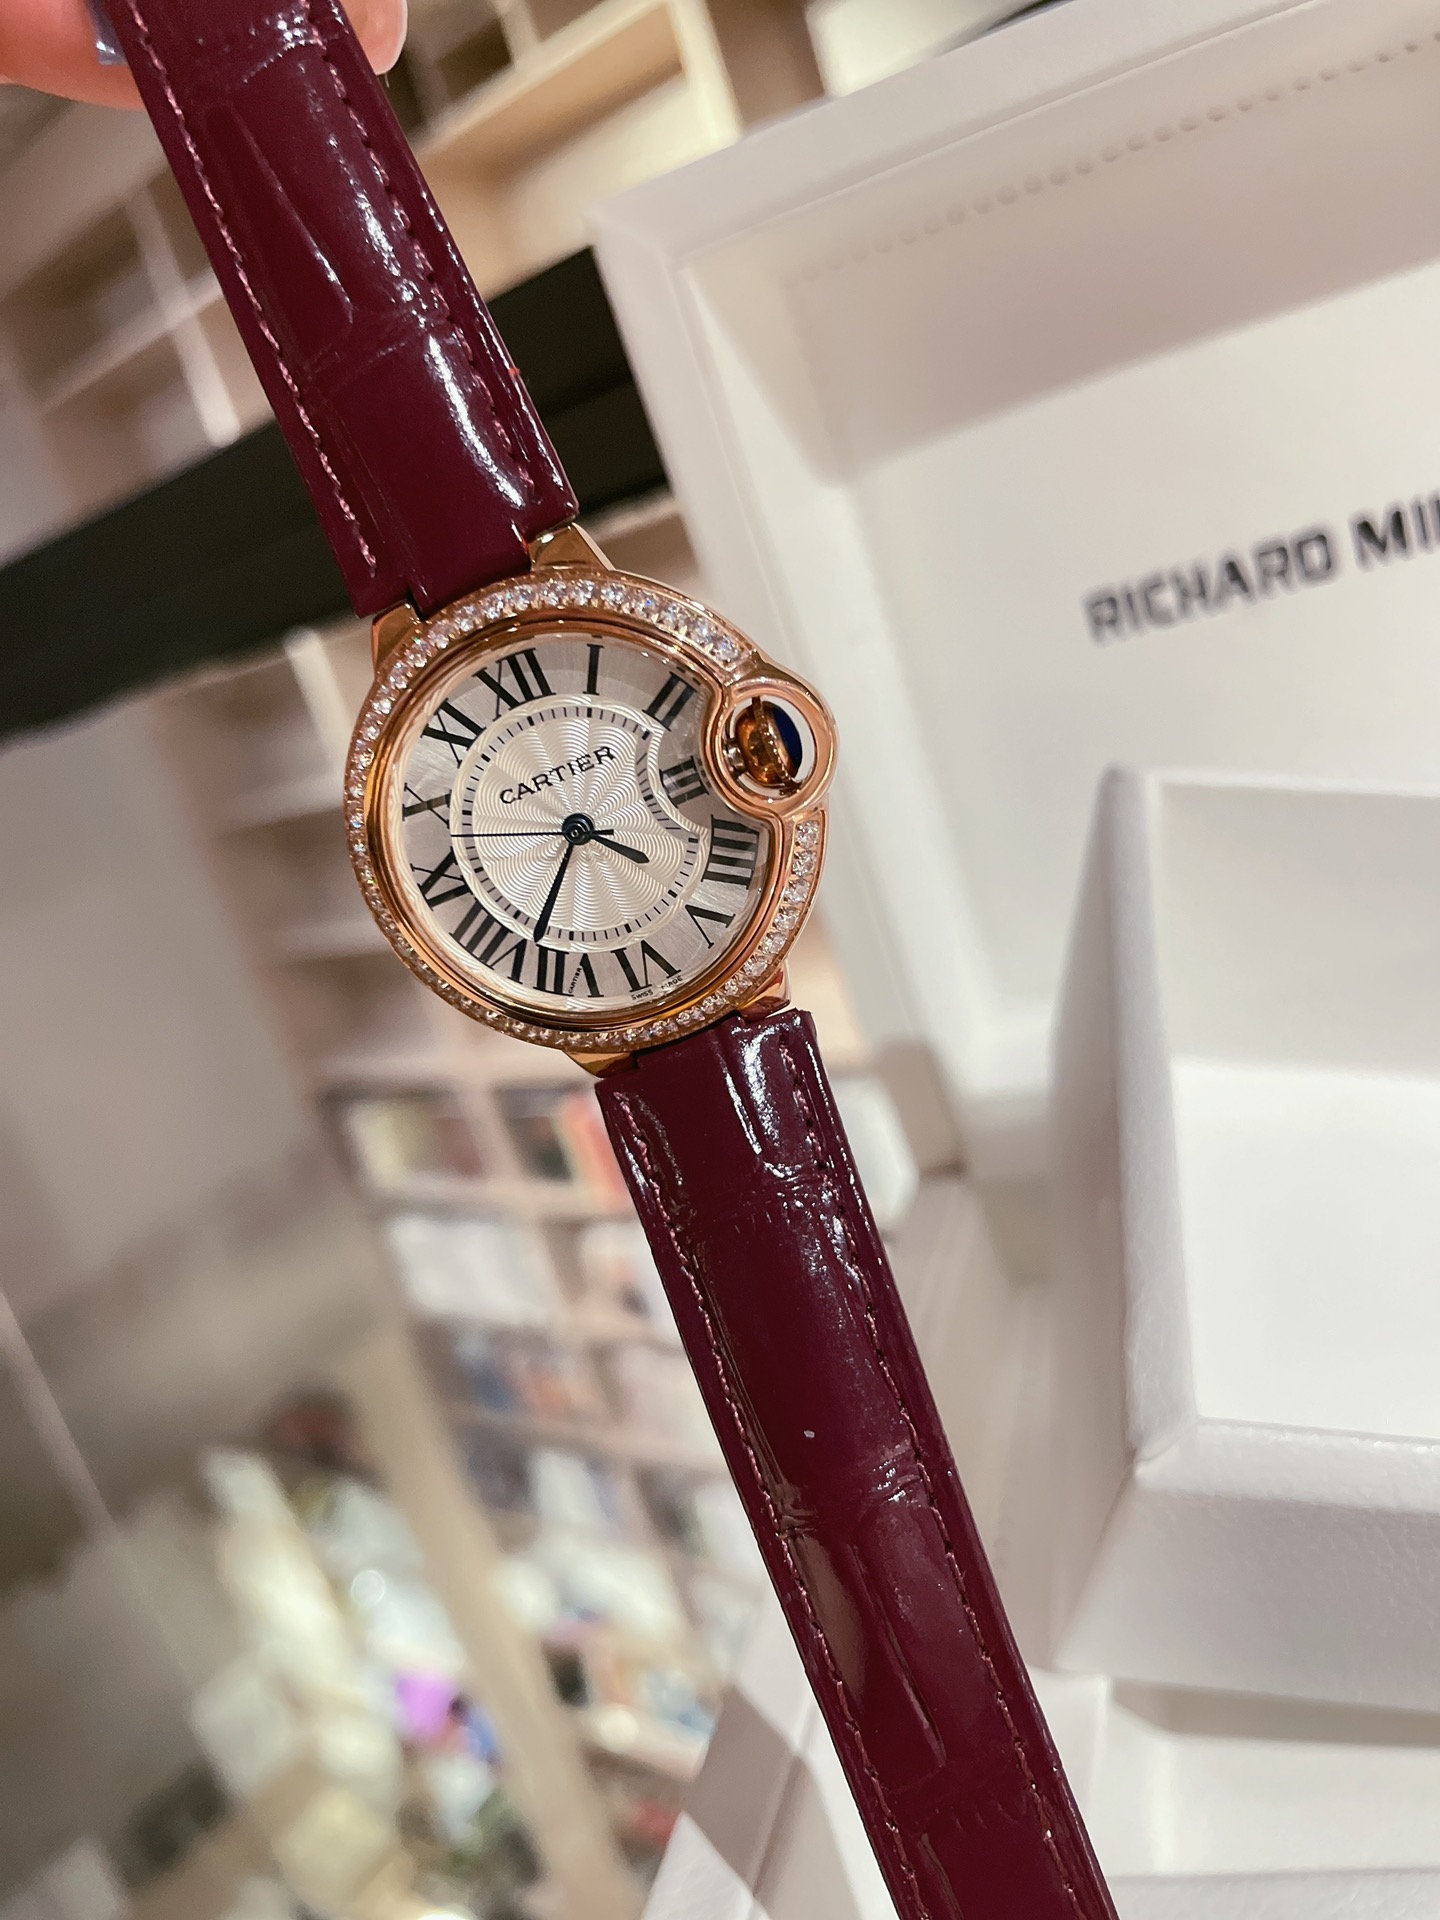 CARTIERカルティエ マレーシアｎ級品 フランス 薄い腕時計 丸い形 レザー 新商品 限定品 レッド_5